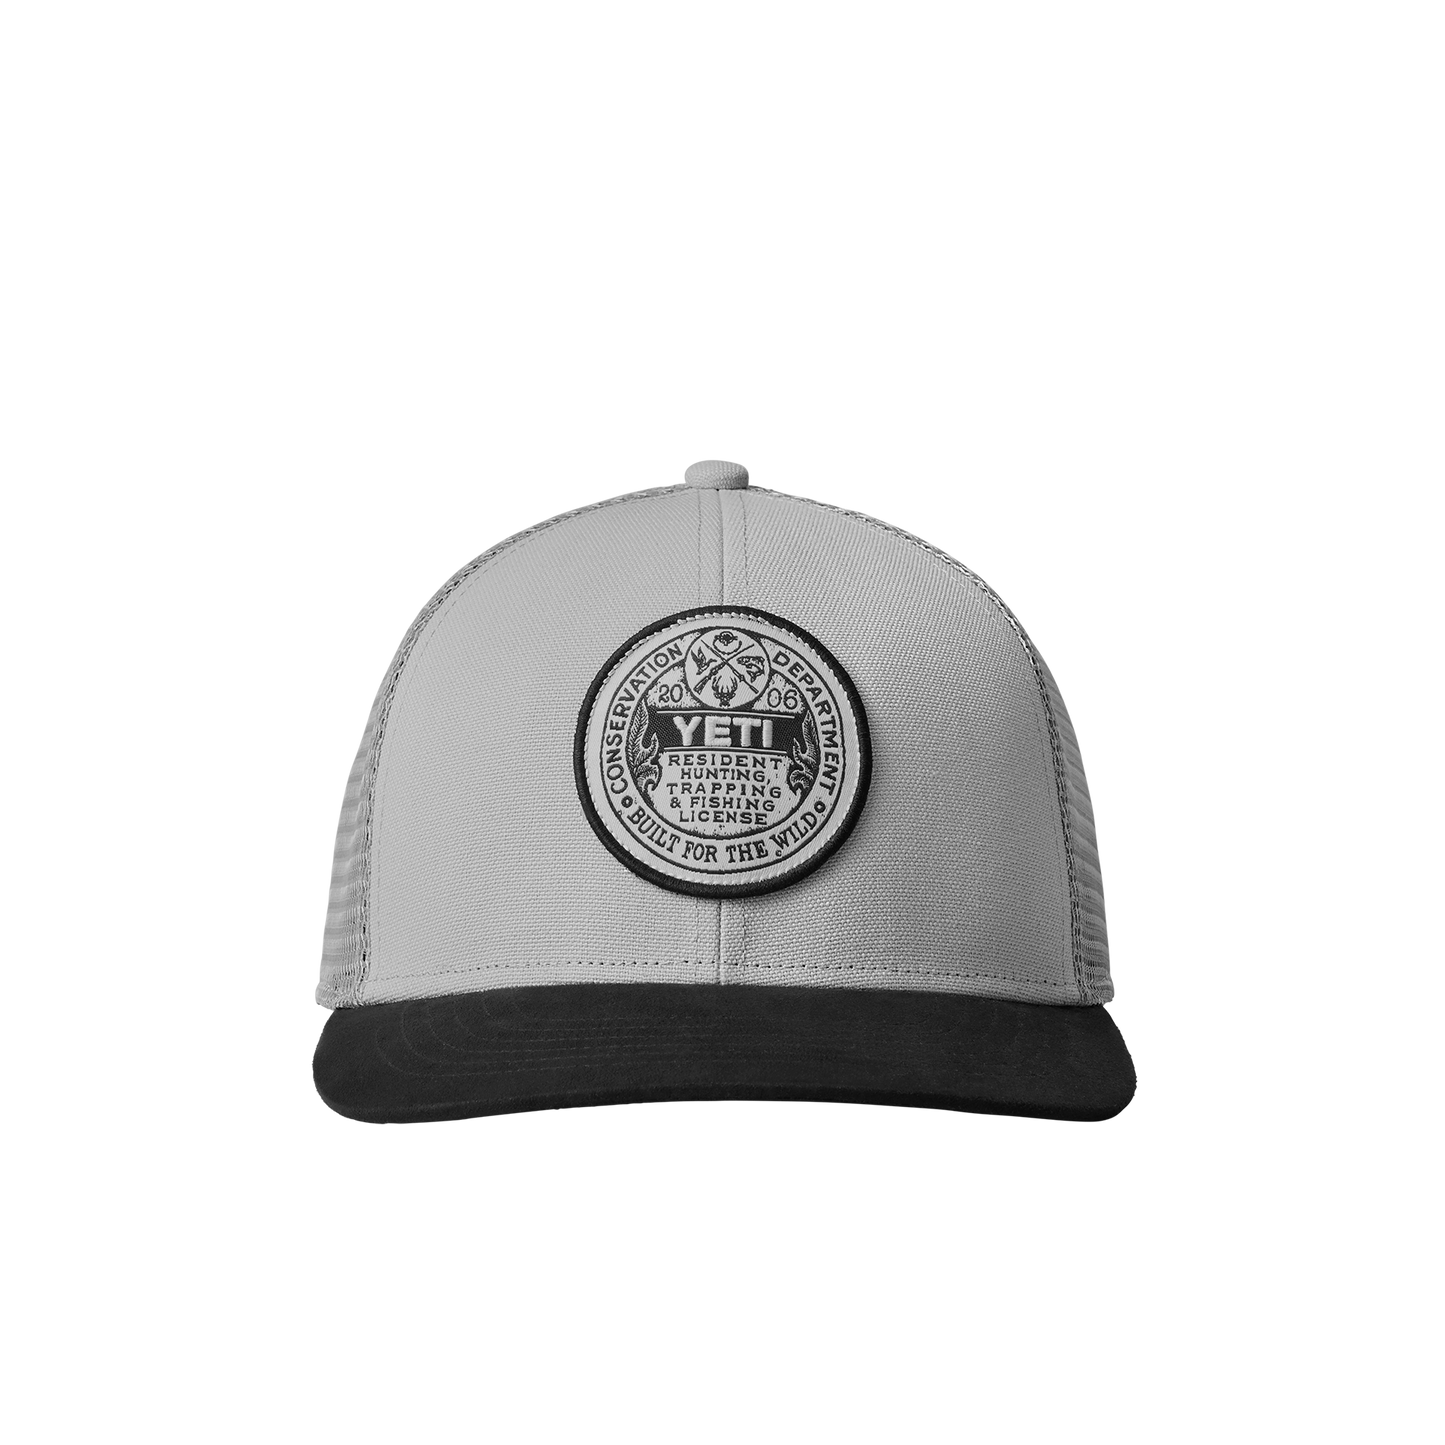 YETI Trapping License Trucker Hat Grey/Black